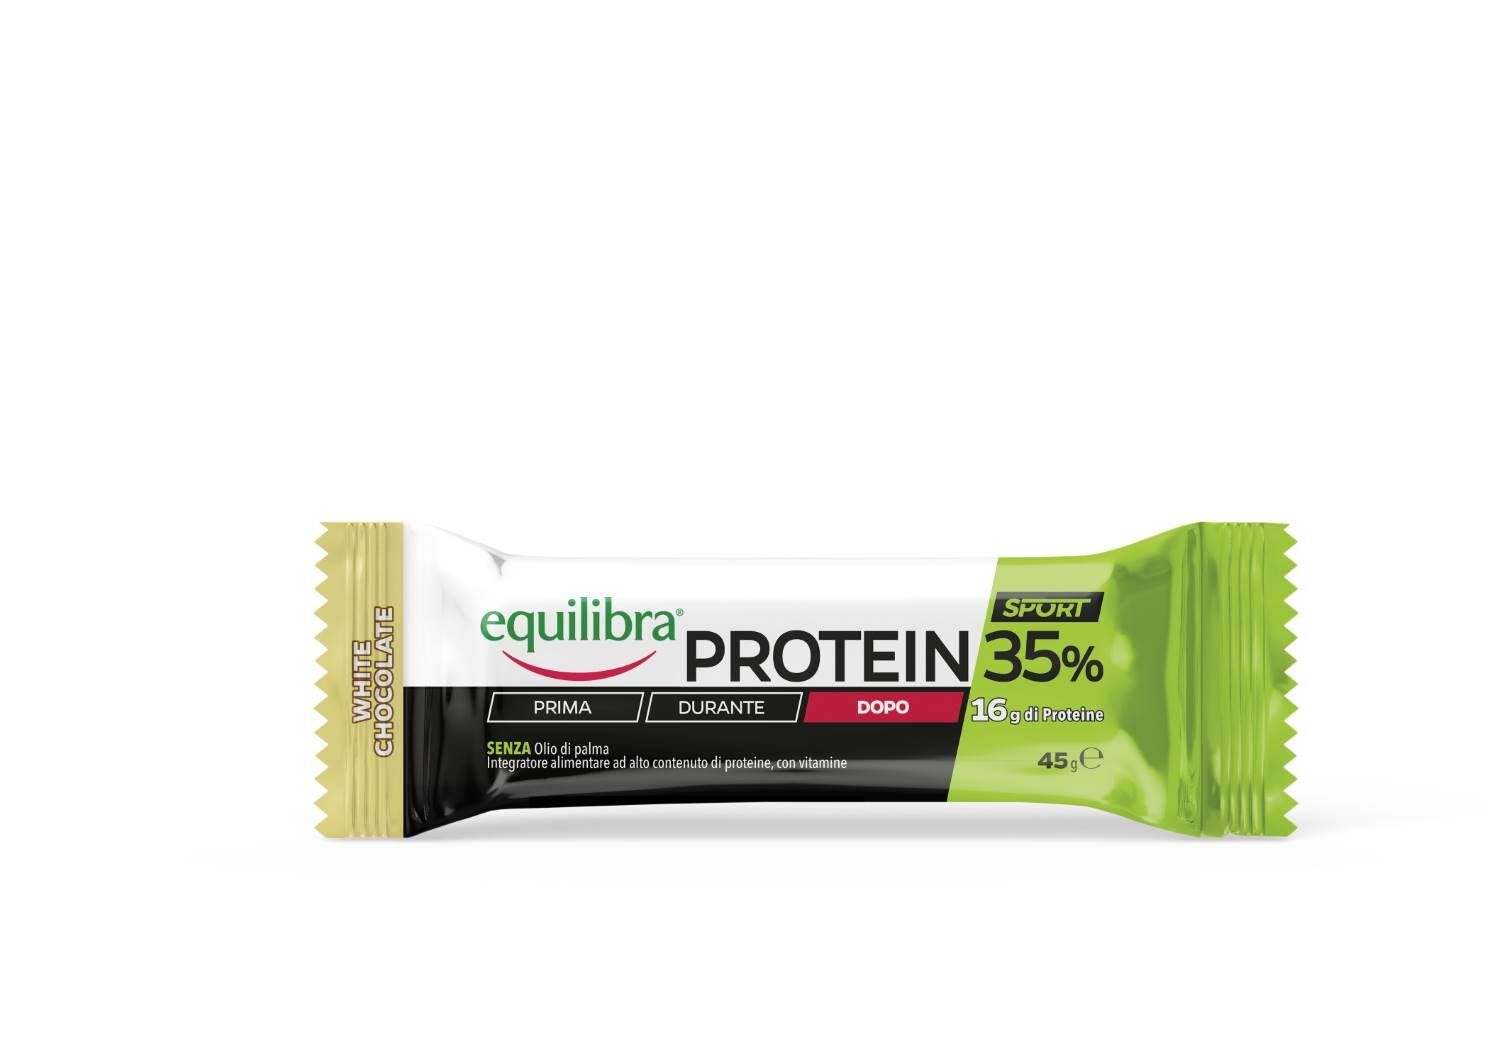 Equilibra Protein 35% White Chocolate 45g